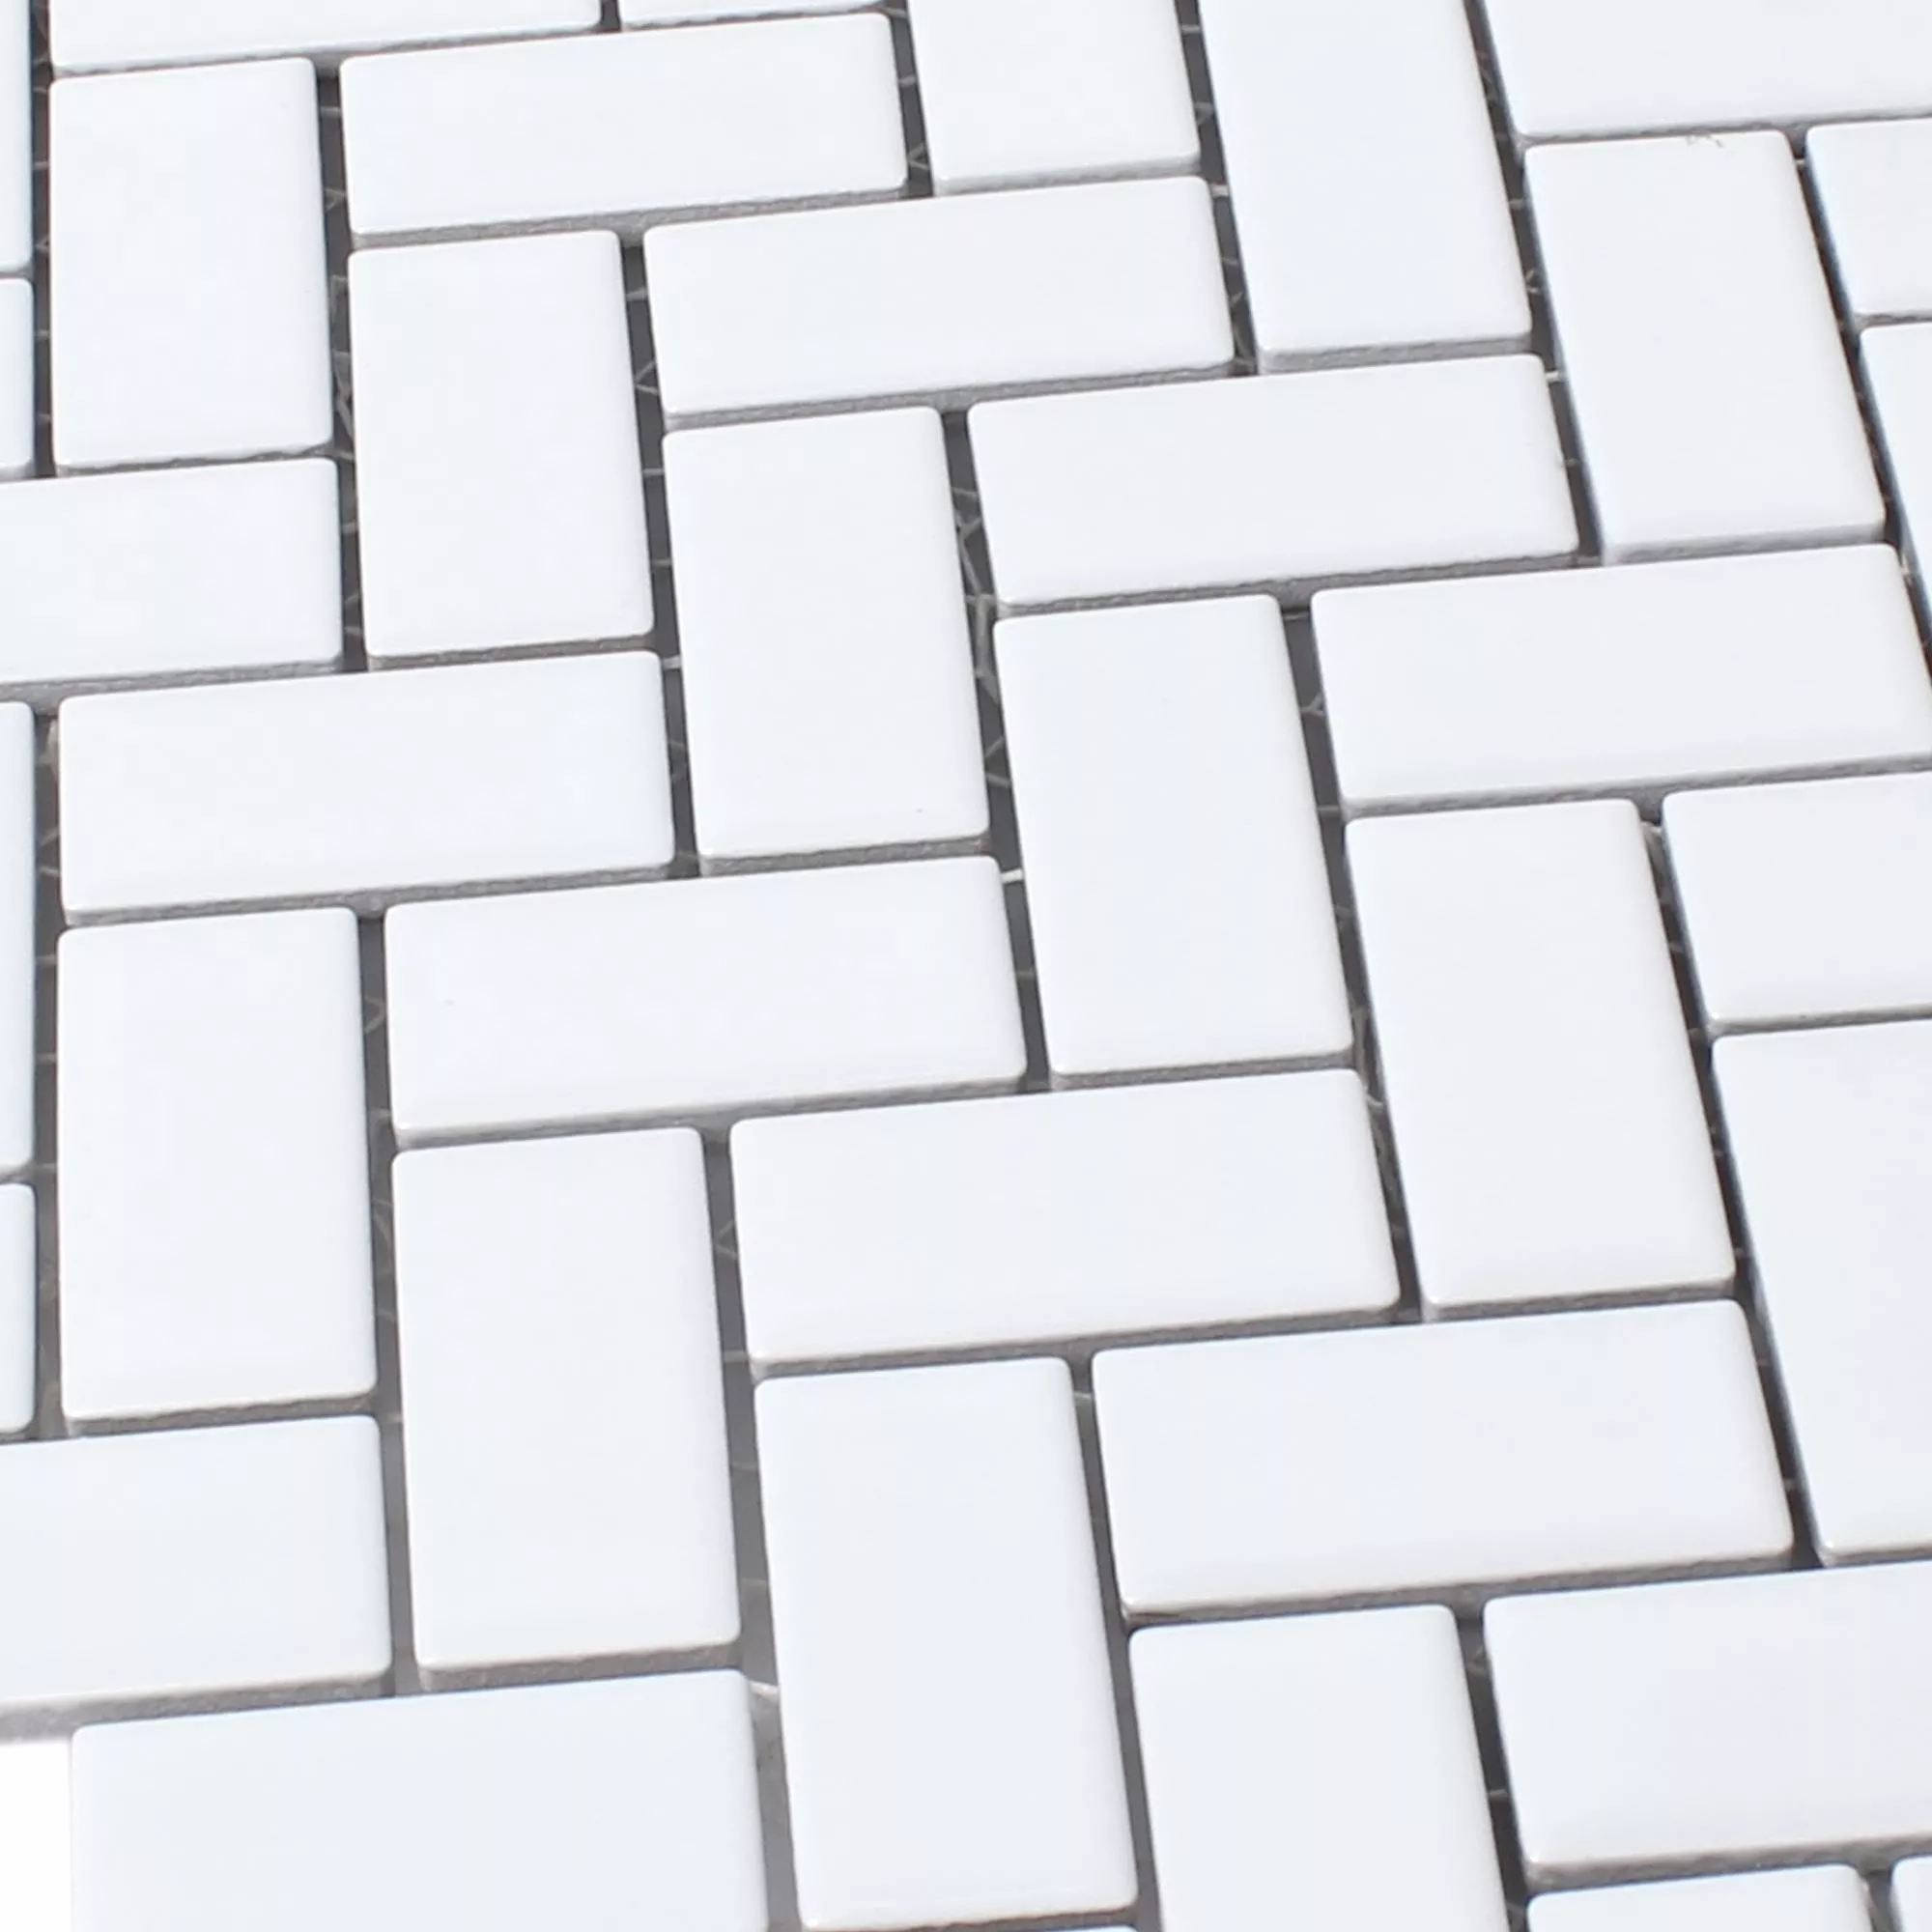 Sample Mosaic Tiles Ceramic Casillas White Mat